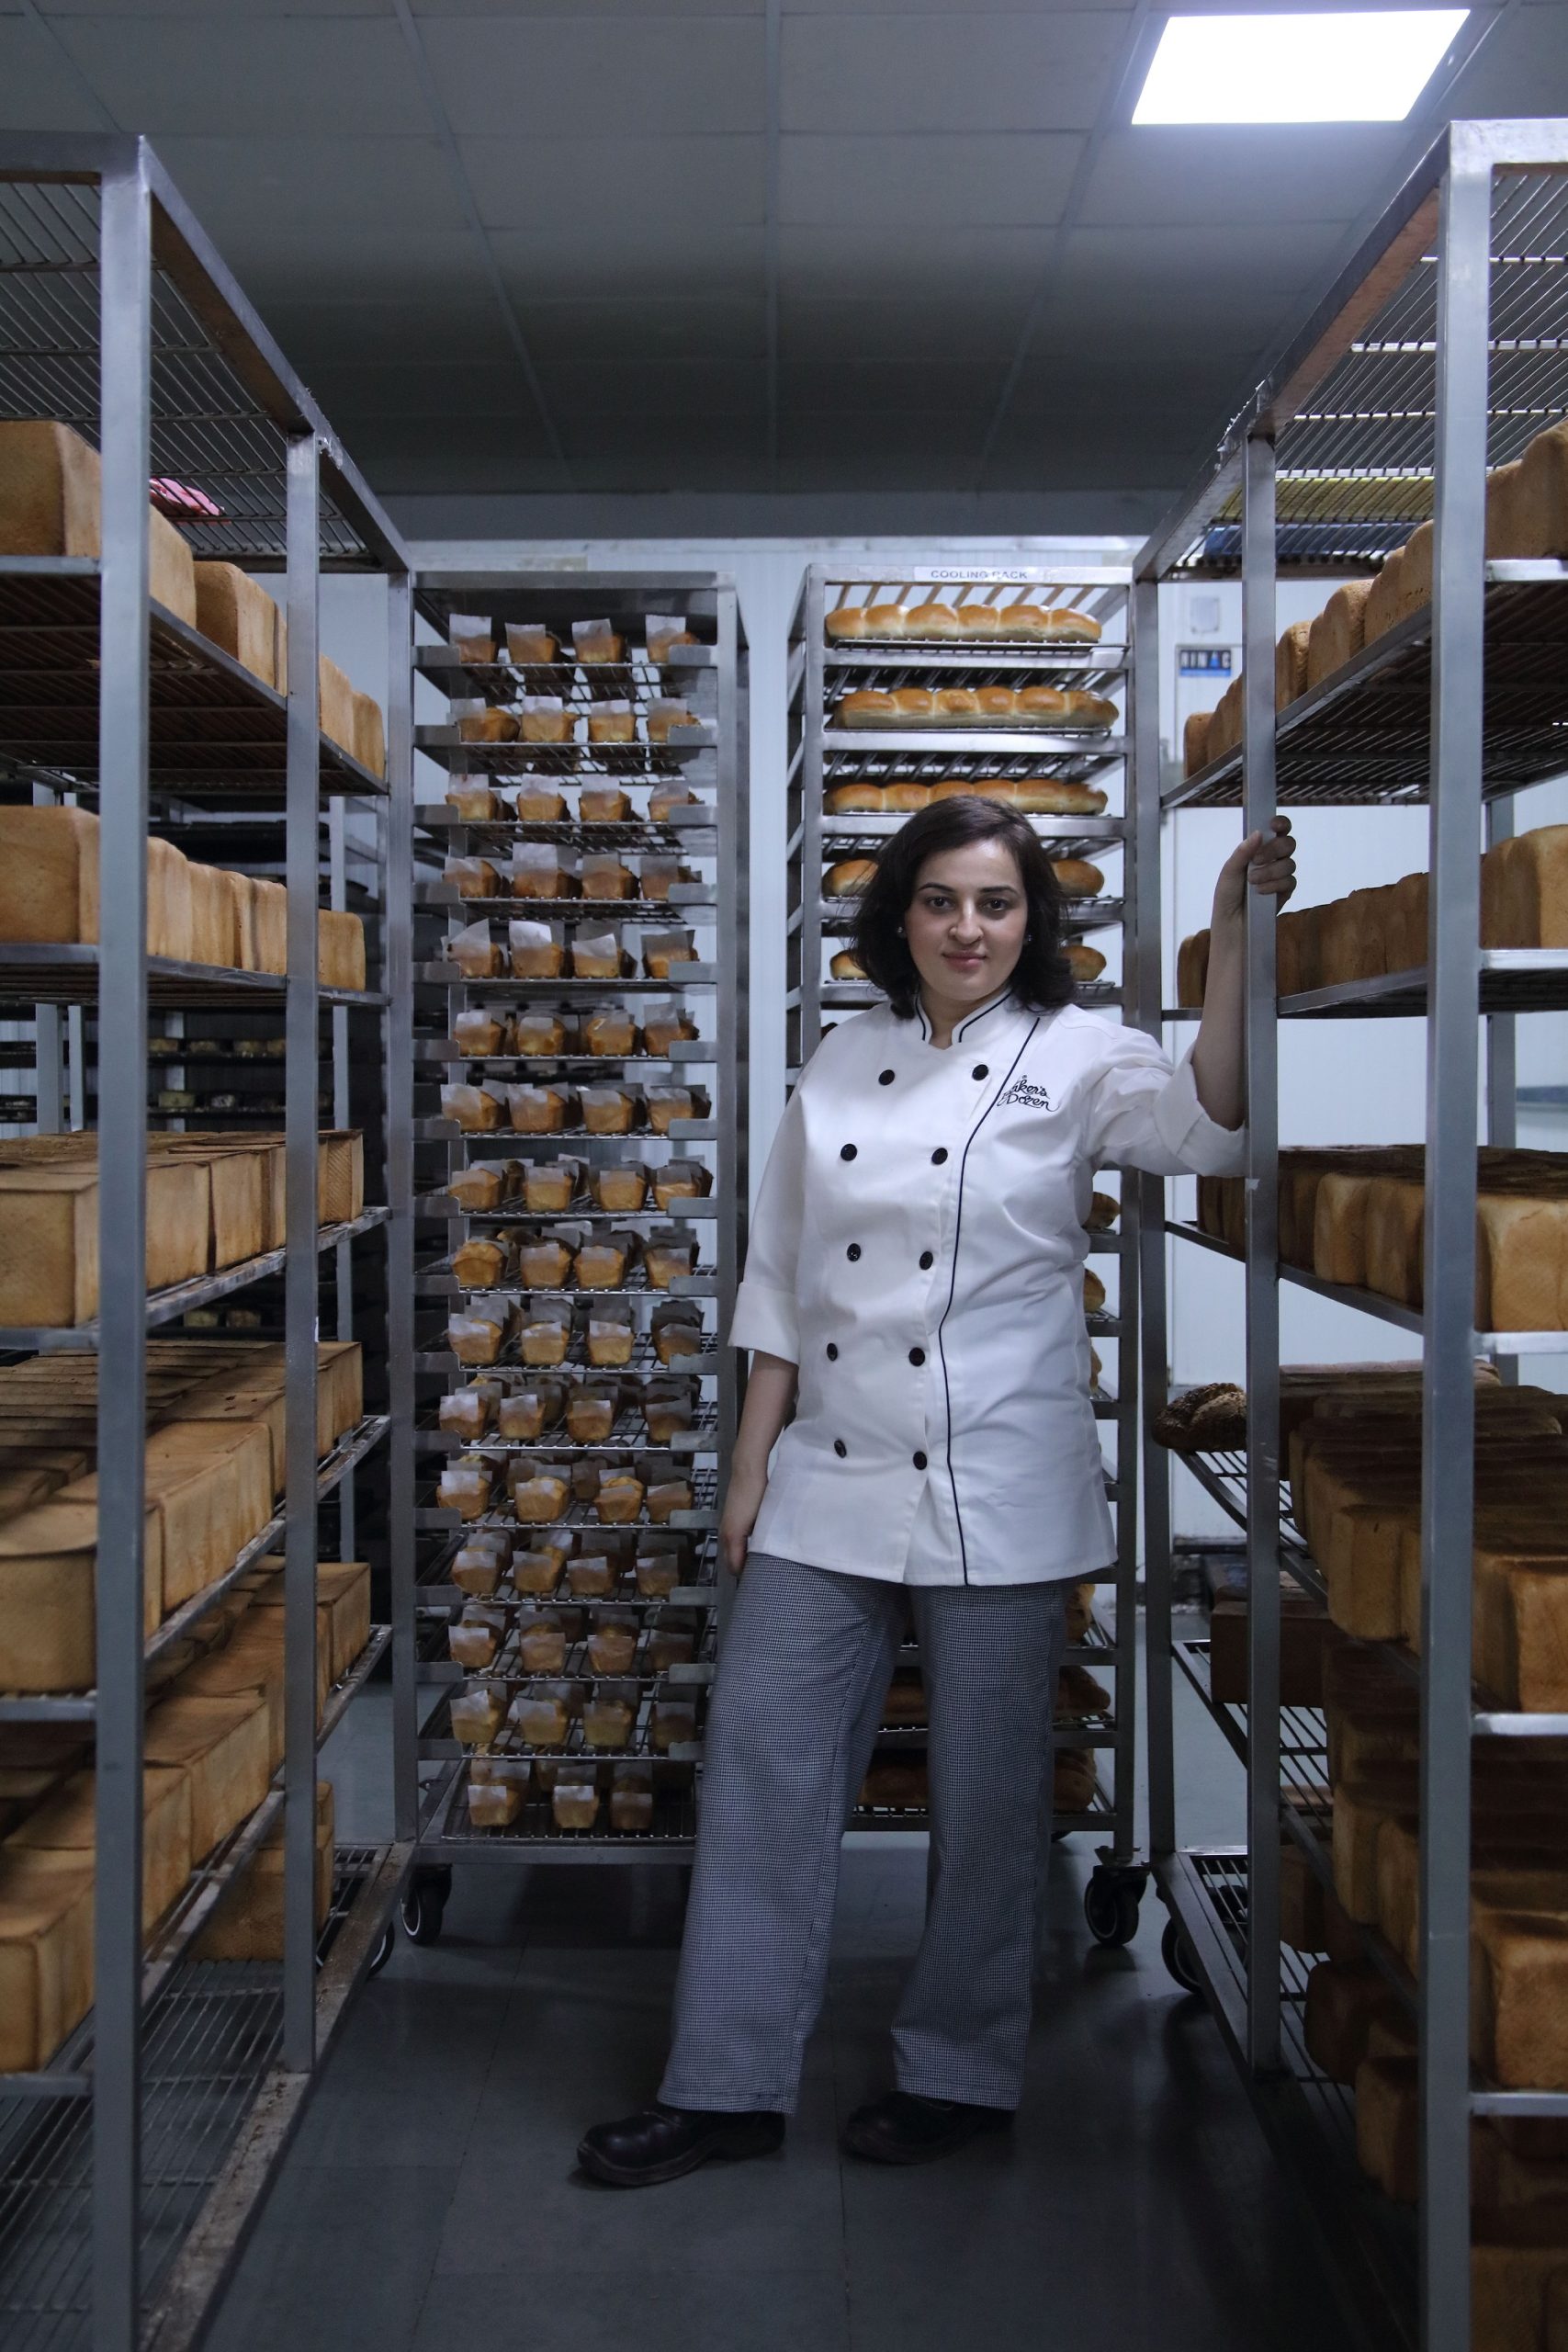 The queen of oven fresh: Aditi Handa serves up The Baker’s Dozen